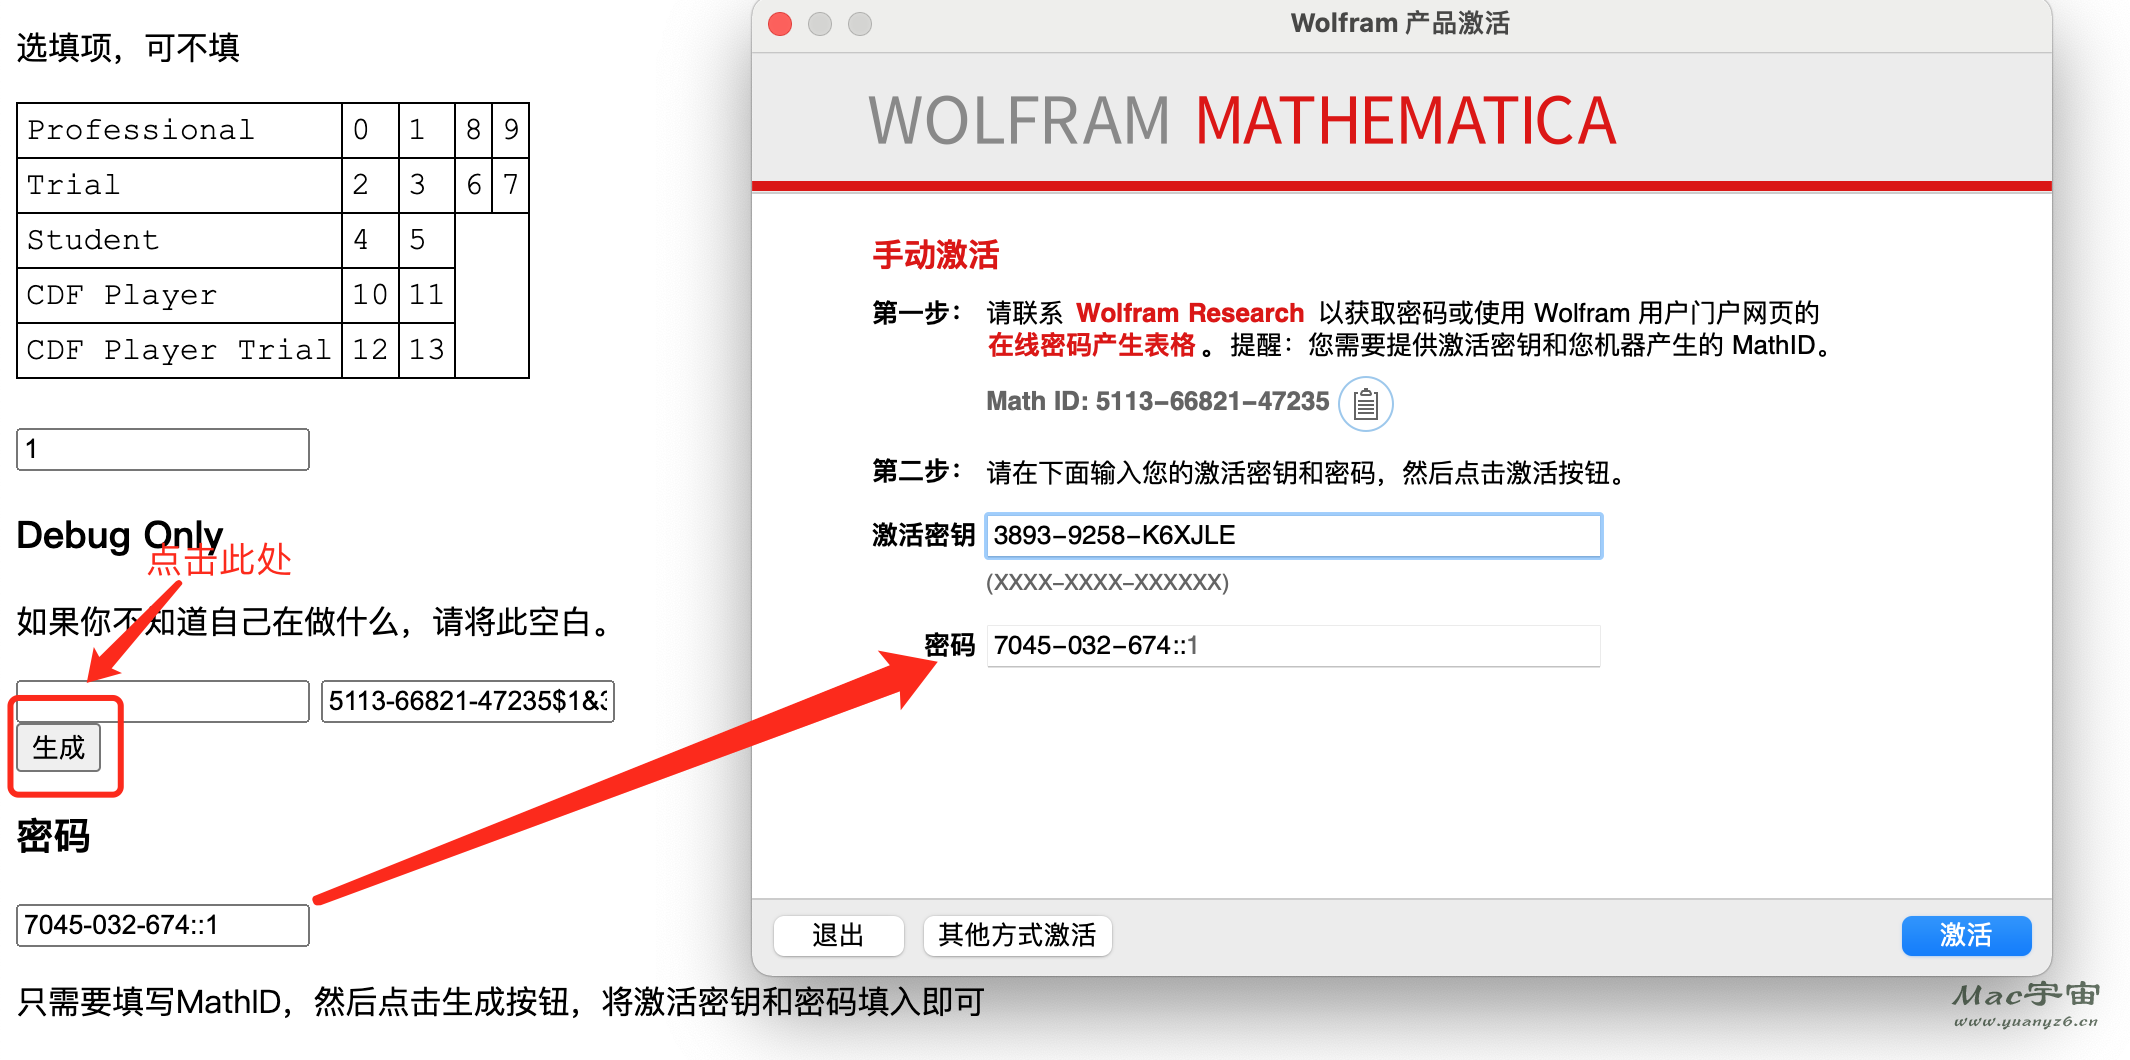 Mathematica for Mac v13.0.1 激活教程 苹果电脑